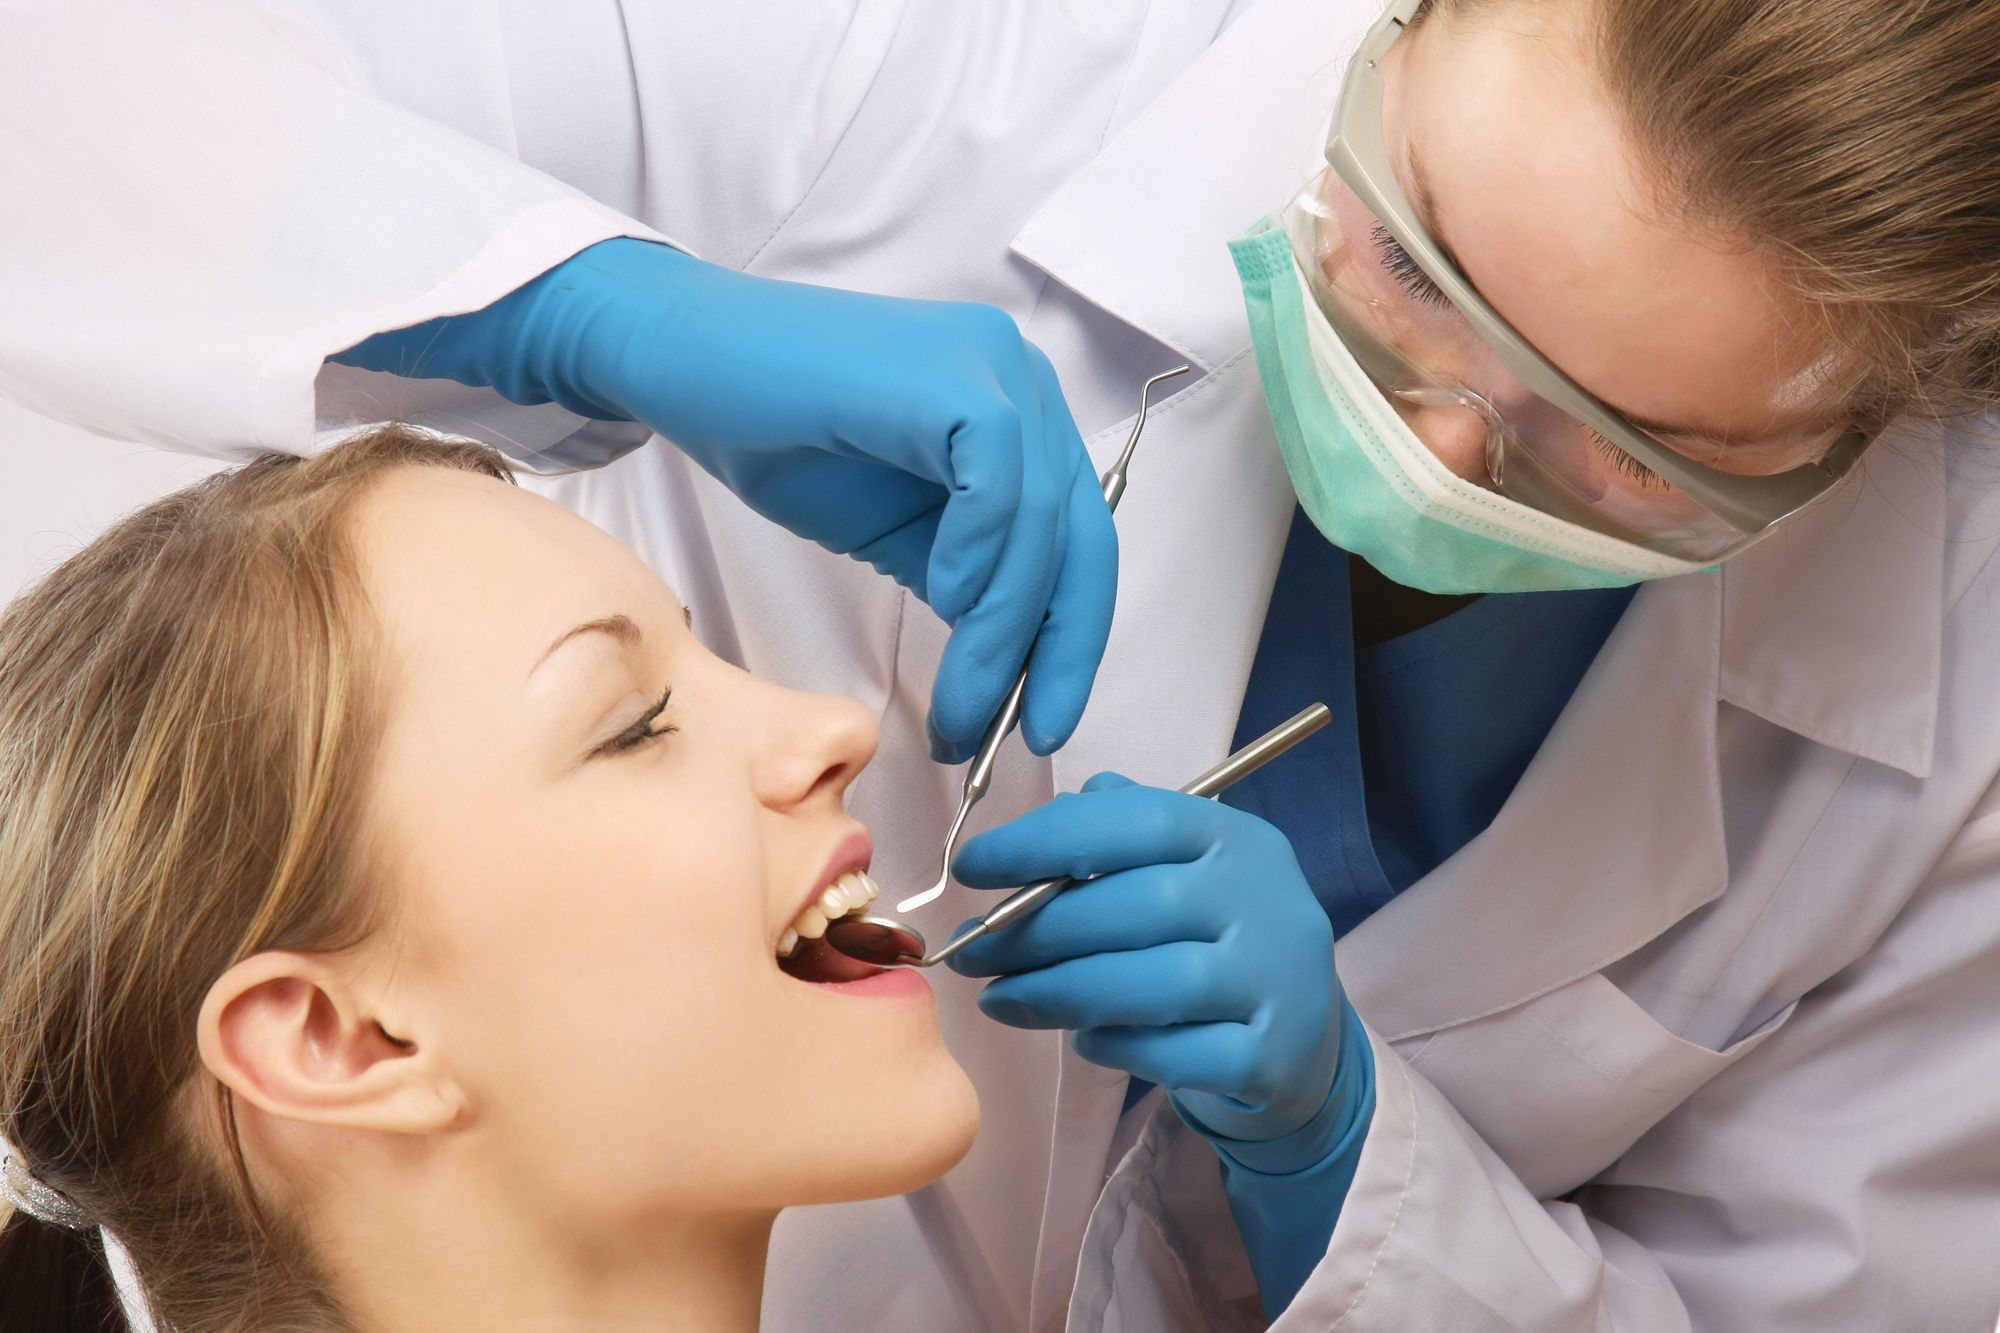 How COVID-19 Permanently Changed Dental Hygiene by Laura Dorr